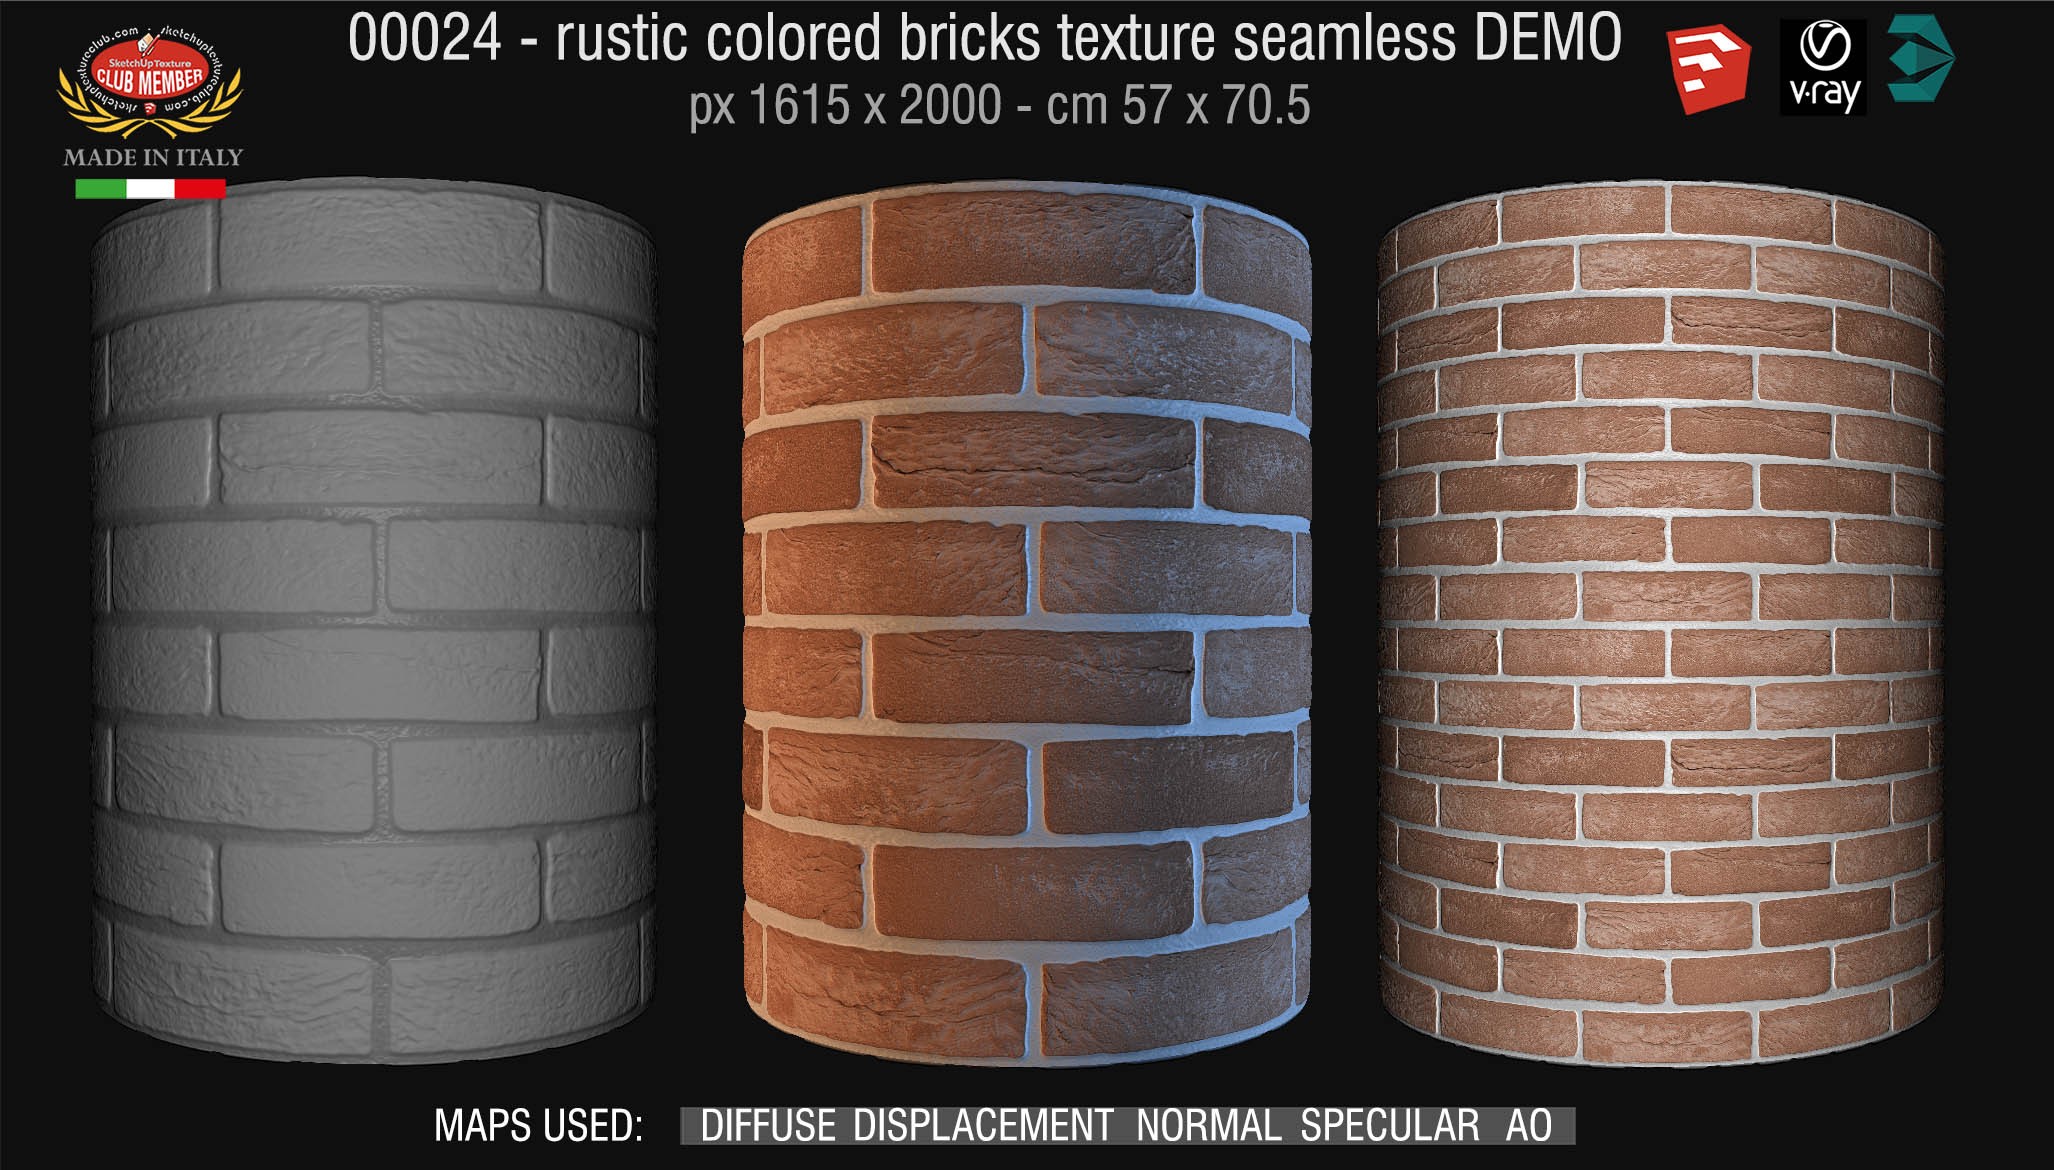 00024 rustic colored bricks texture seamless + maps DEMO